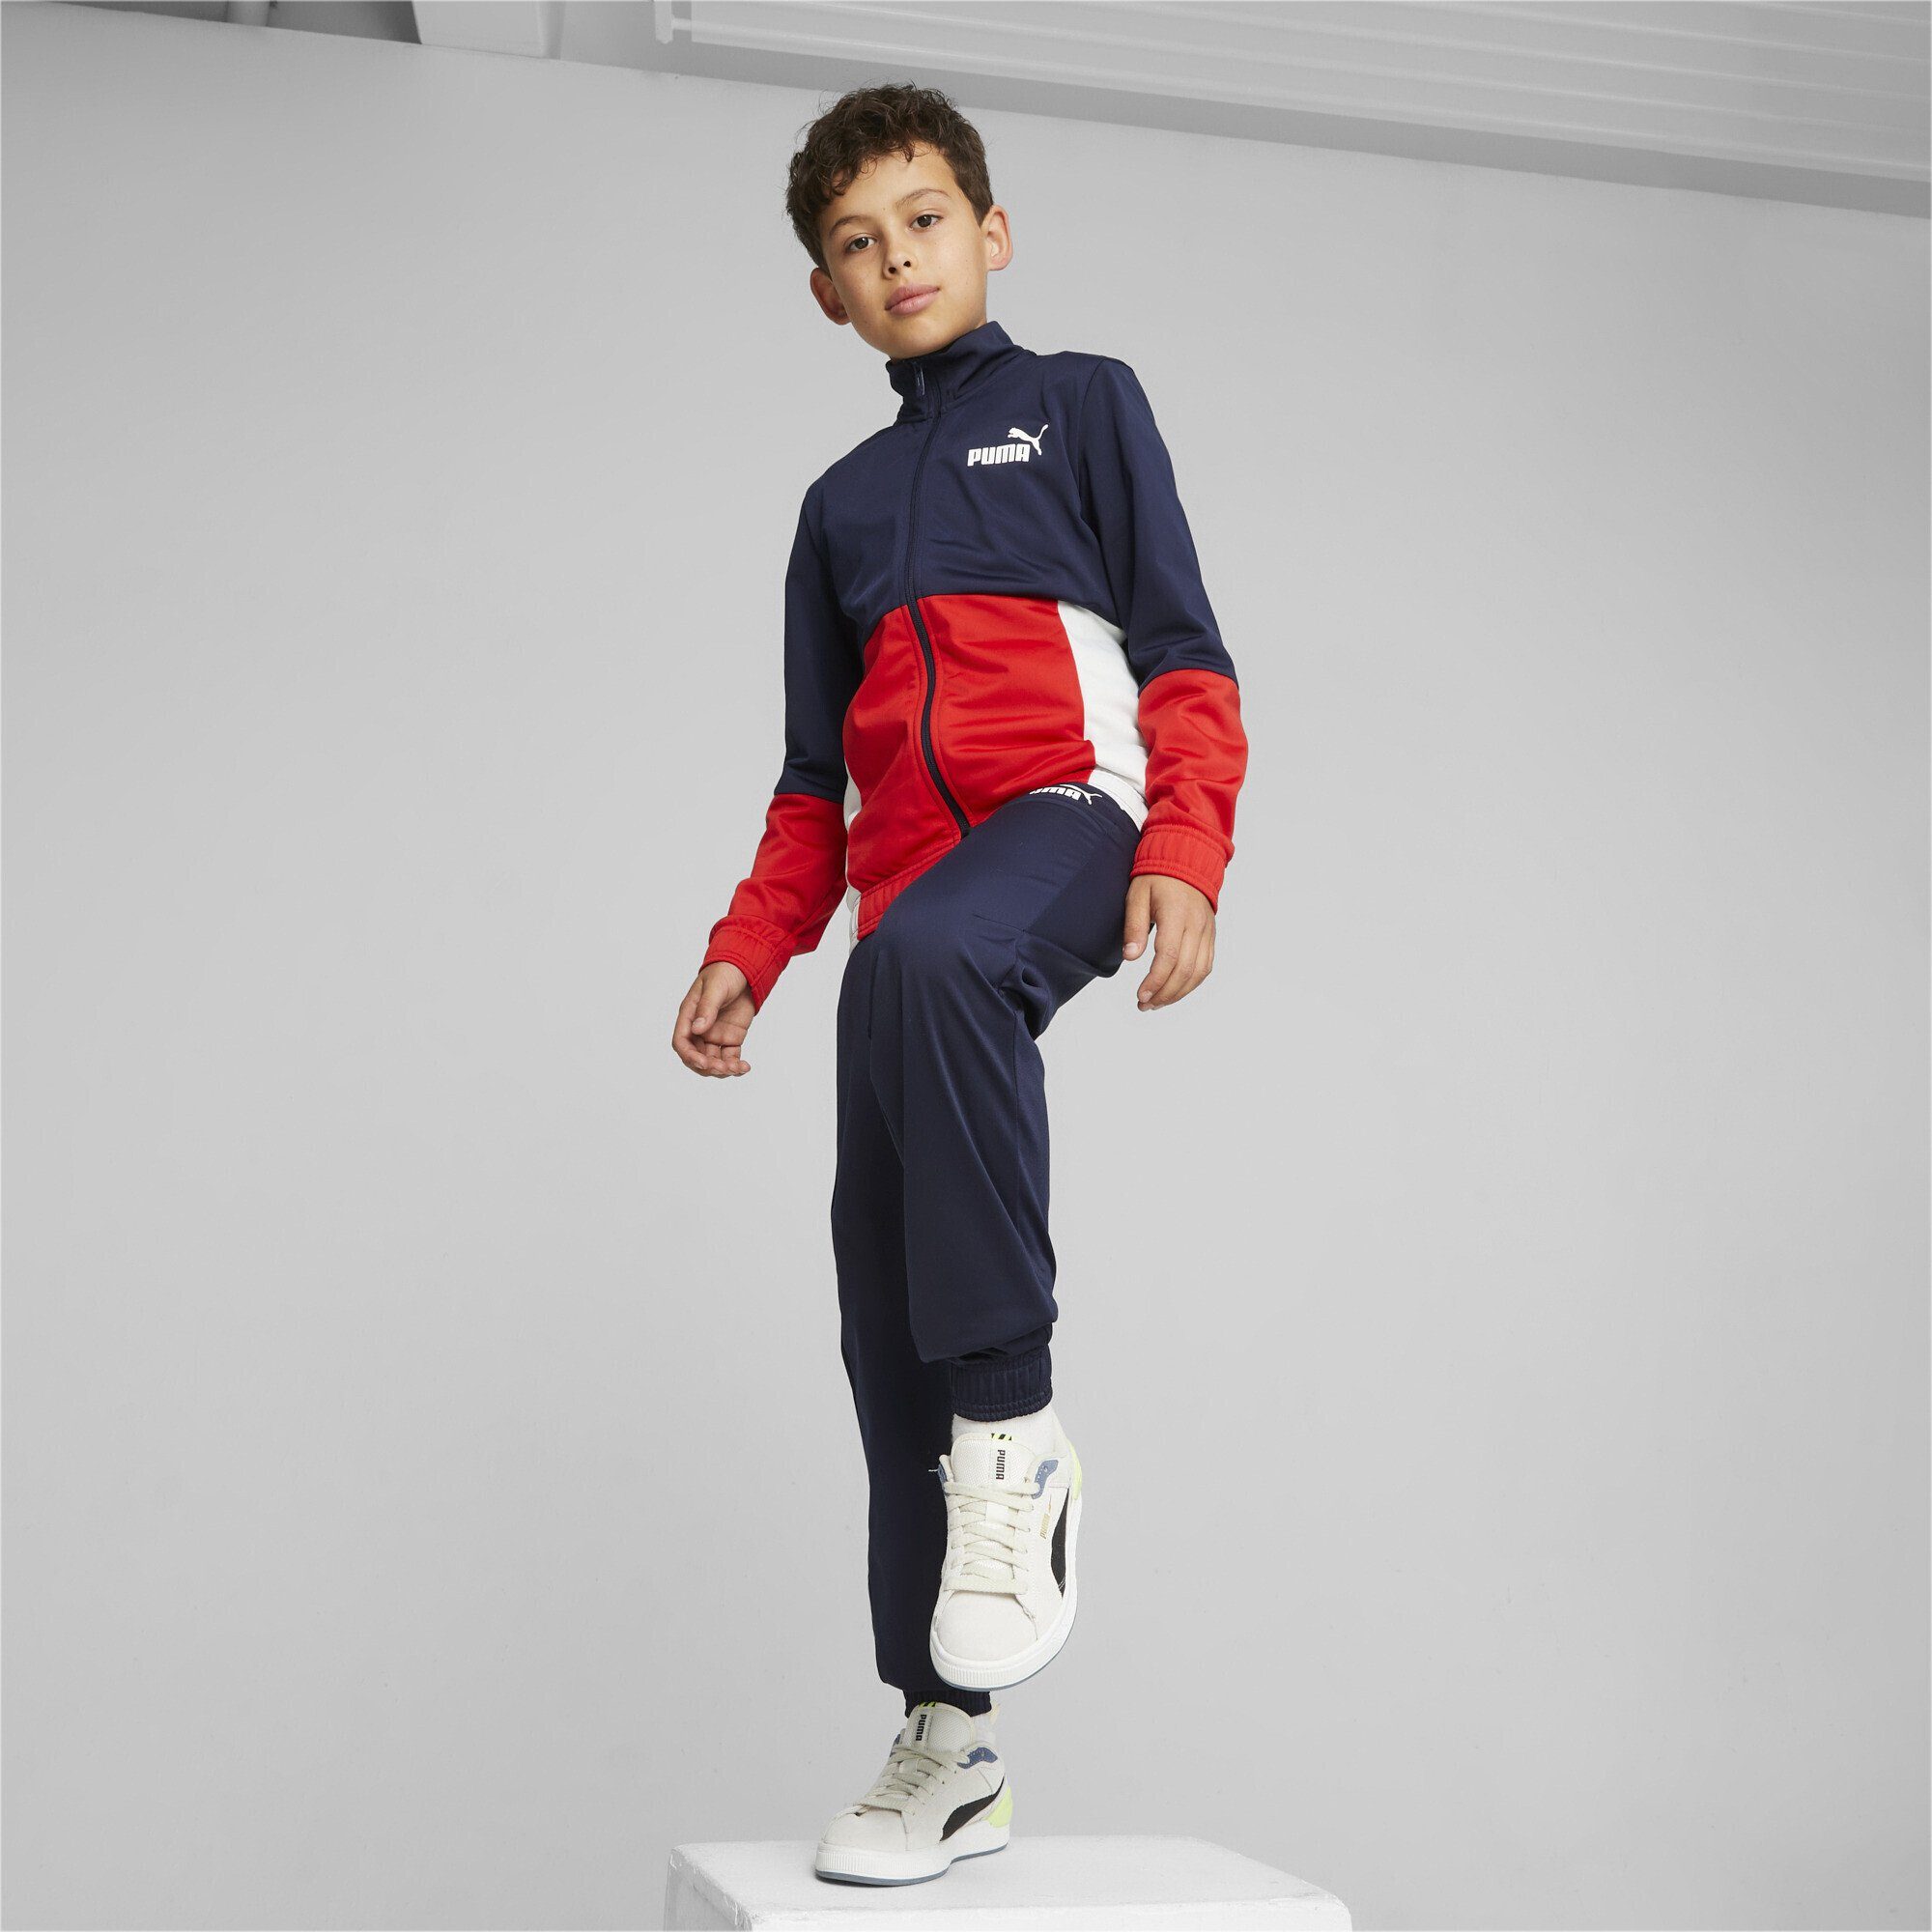 PUMA Colourblock Poly Suit Jungen Blue Navy Jogginganzug